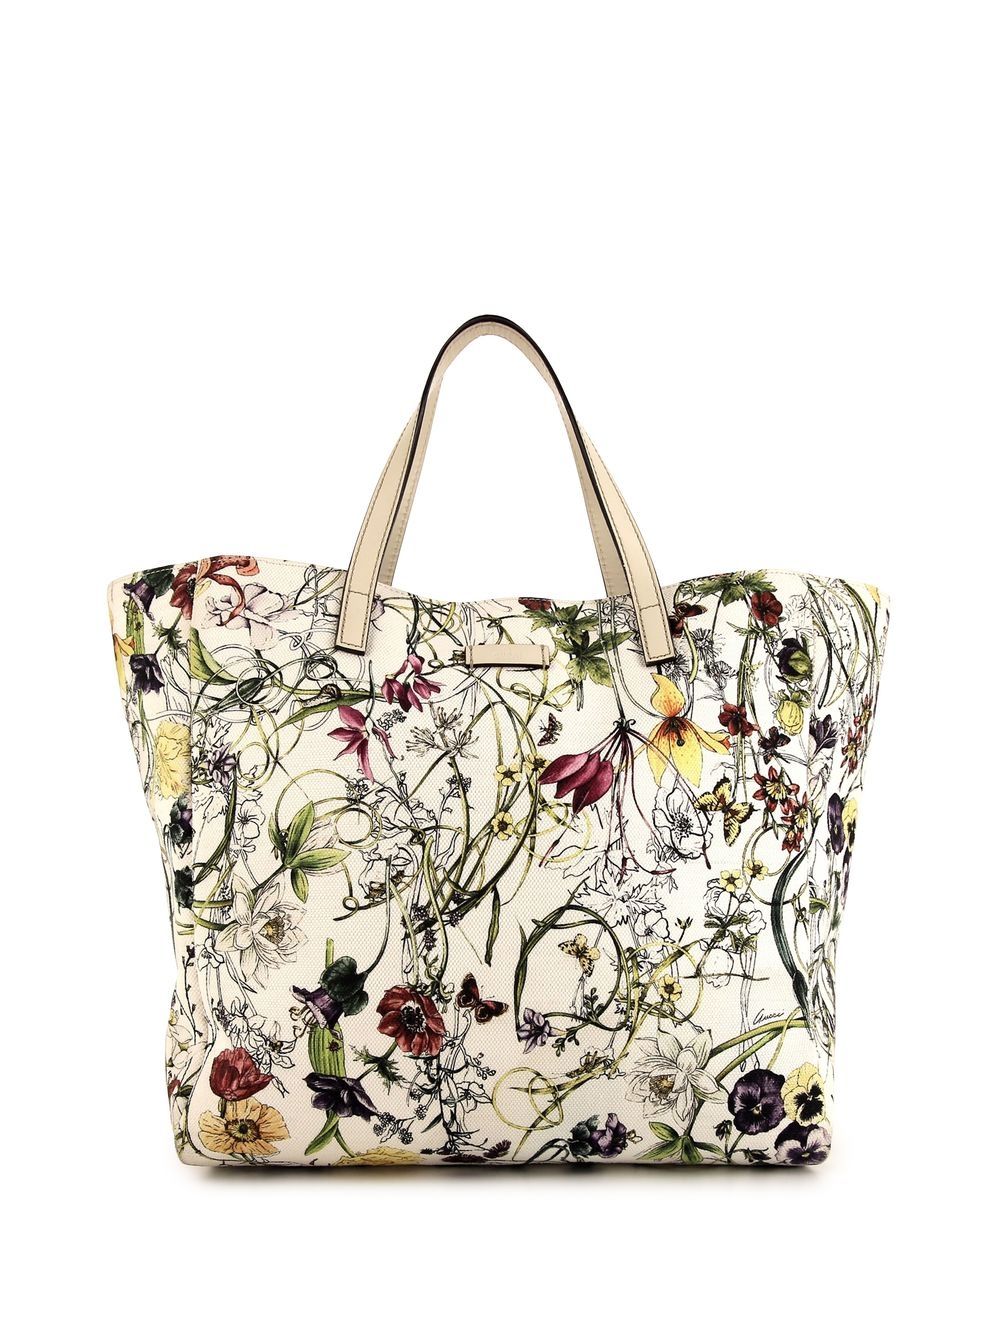 Gucci Children's Floral Print Small Tote Bag